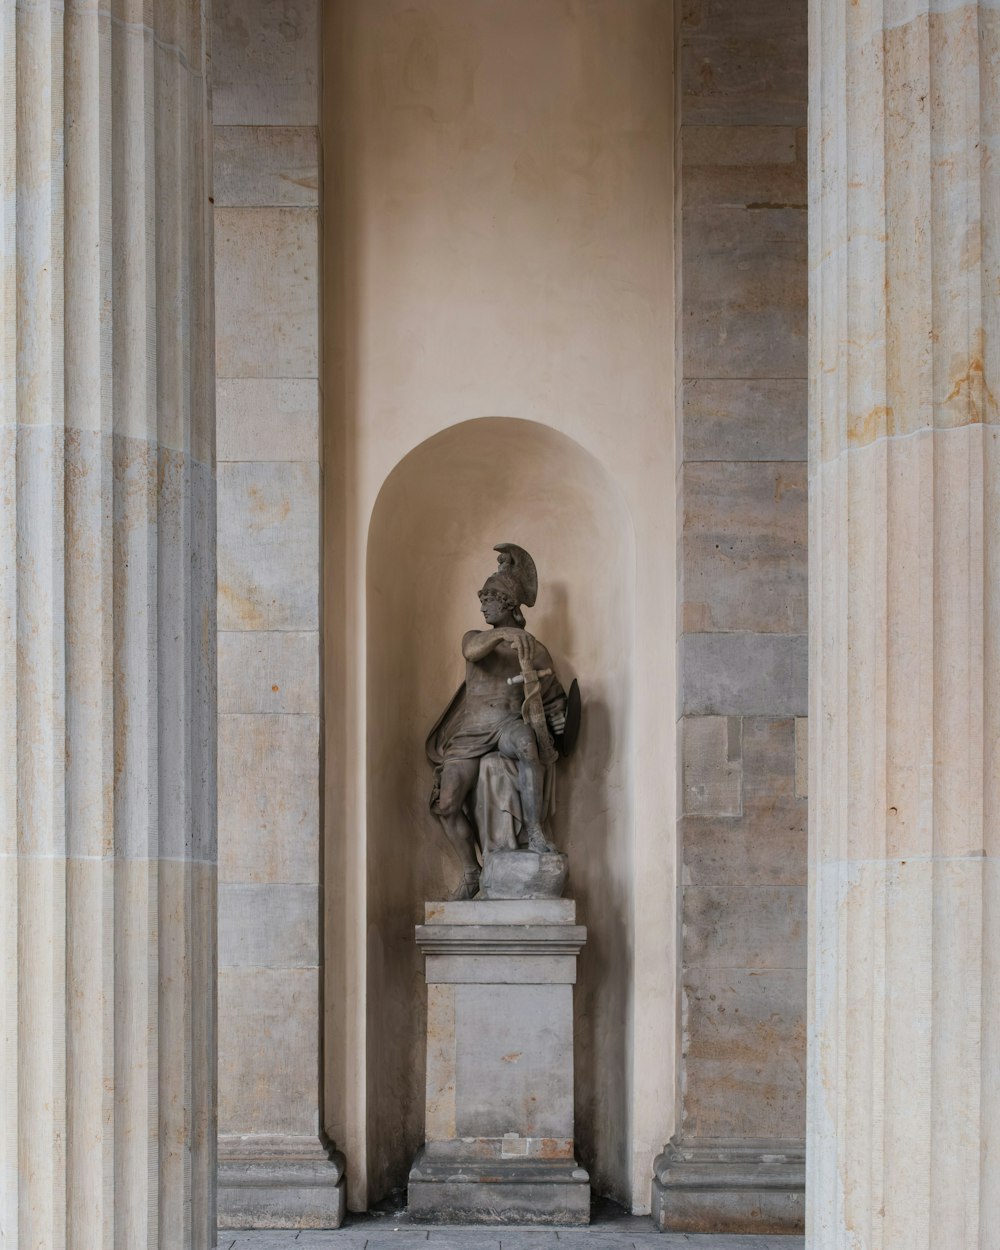 a statue of a man sitting on a pedestal